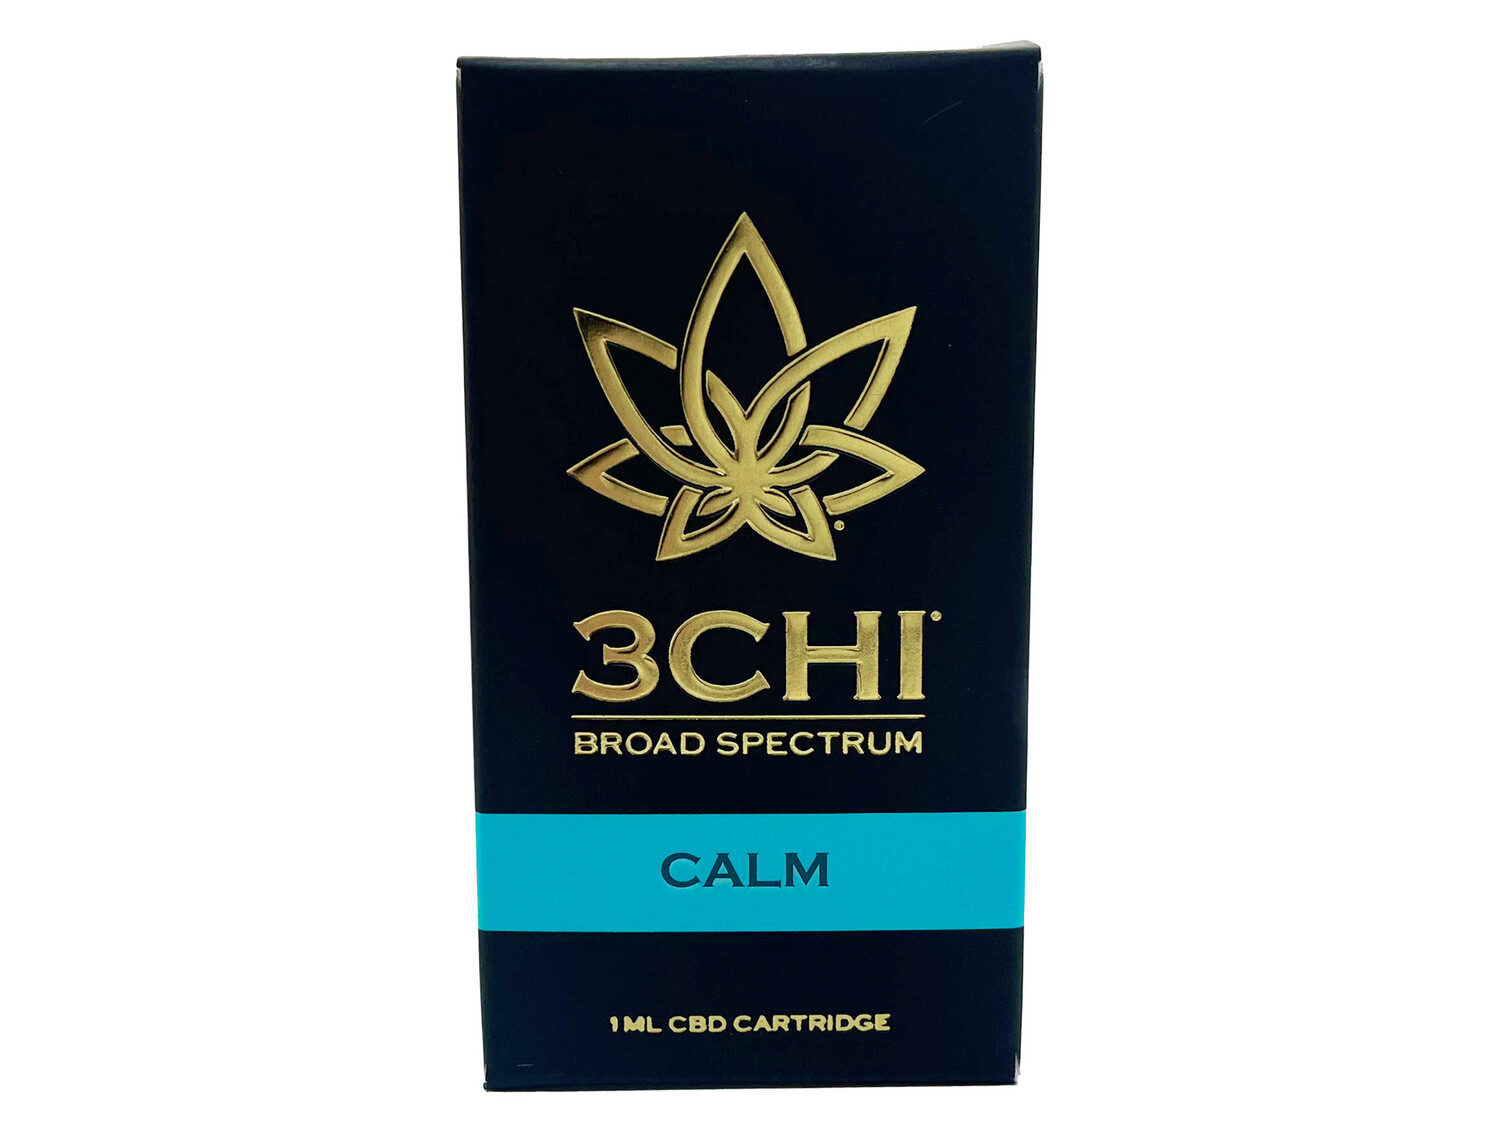 3Chi: Calm CBD Vape Cartridge